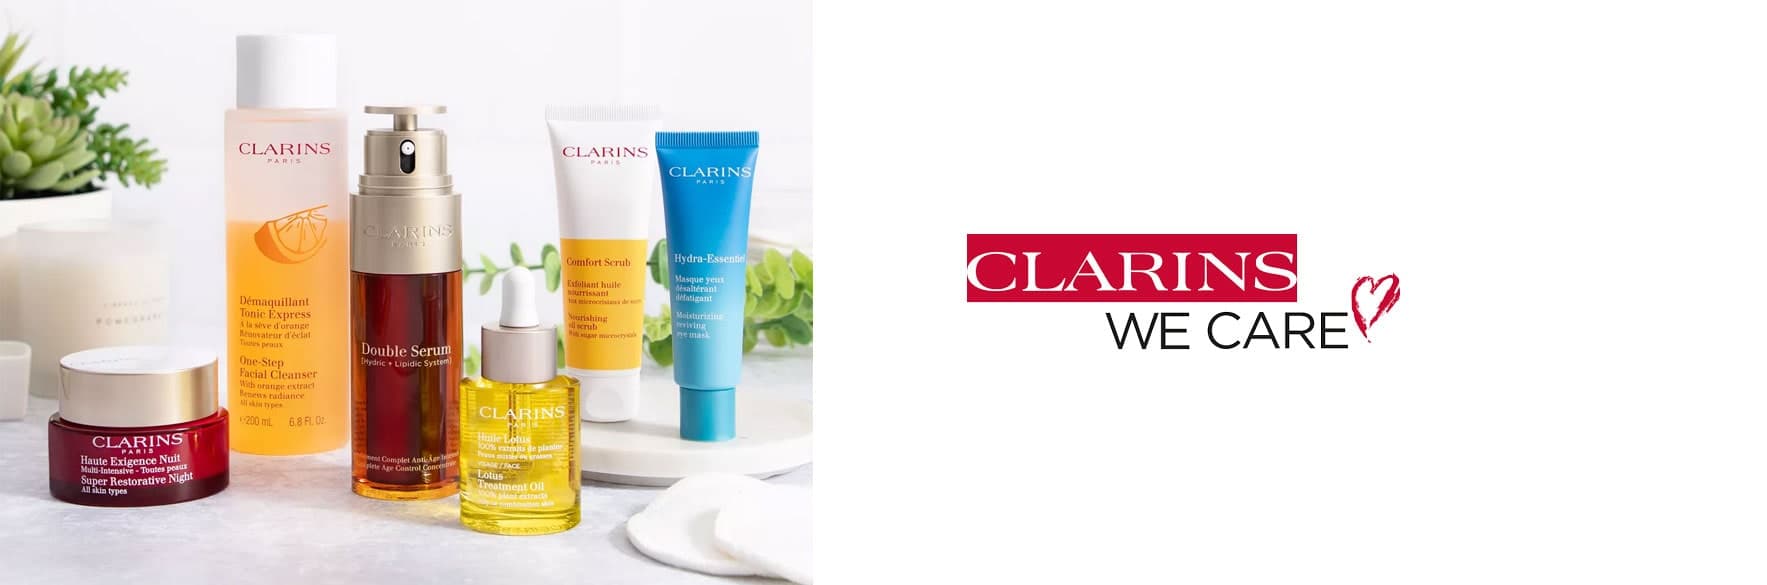 محصولات کلارنس CLARINS اصل